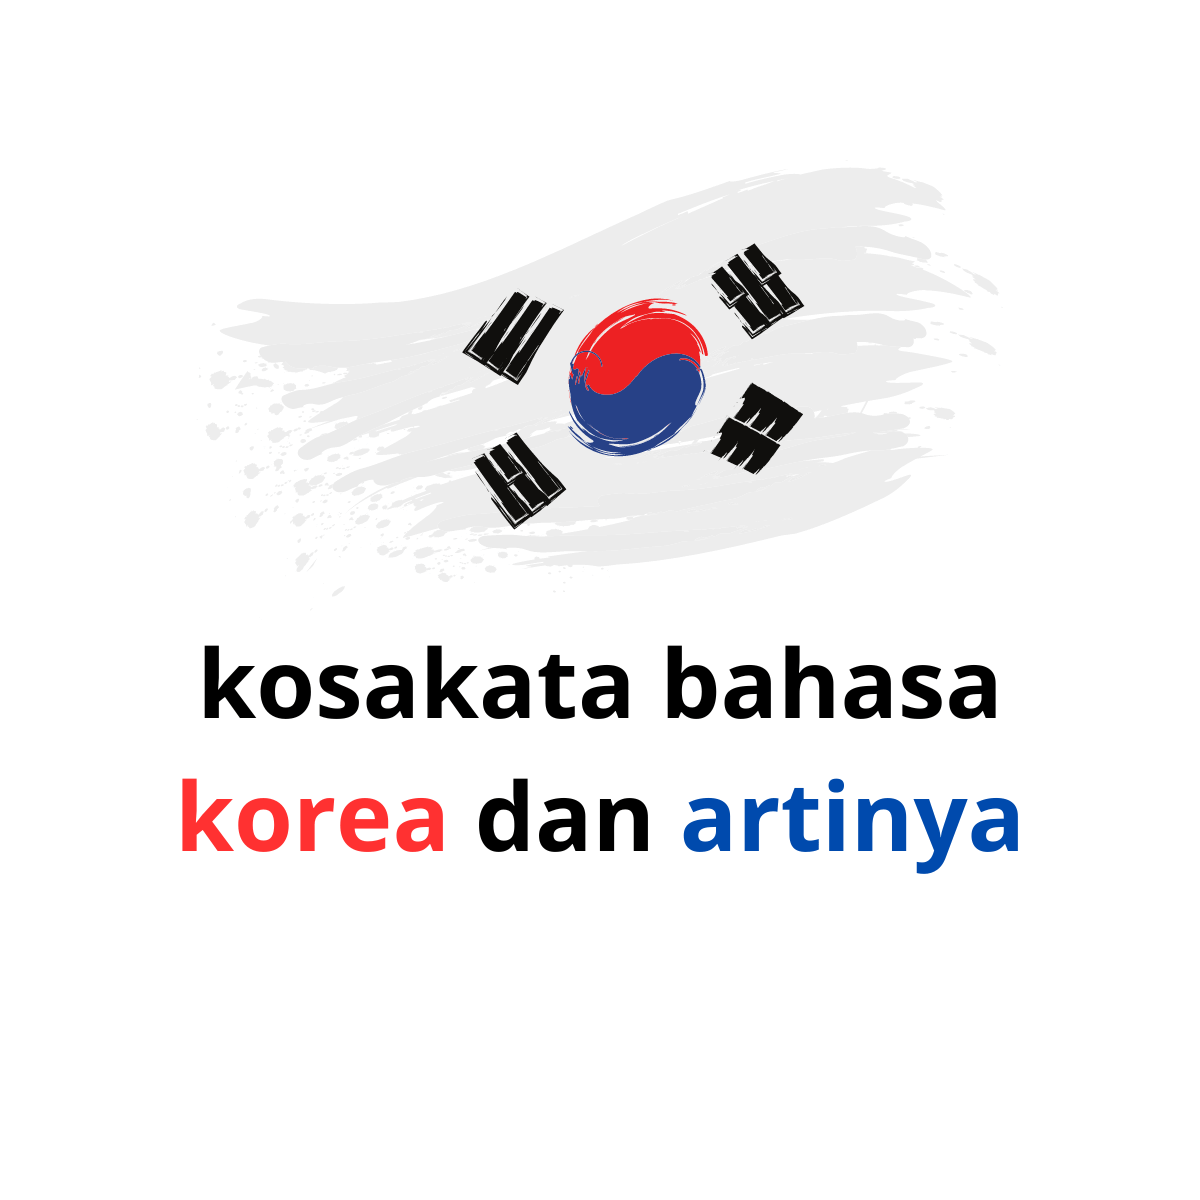 kosakata bahasa korea dan artinya